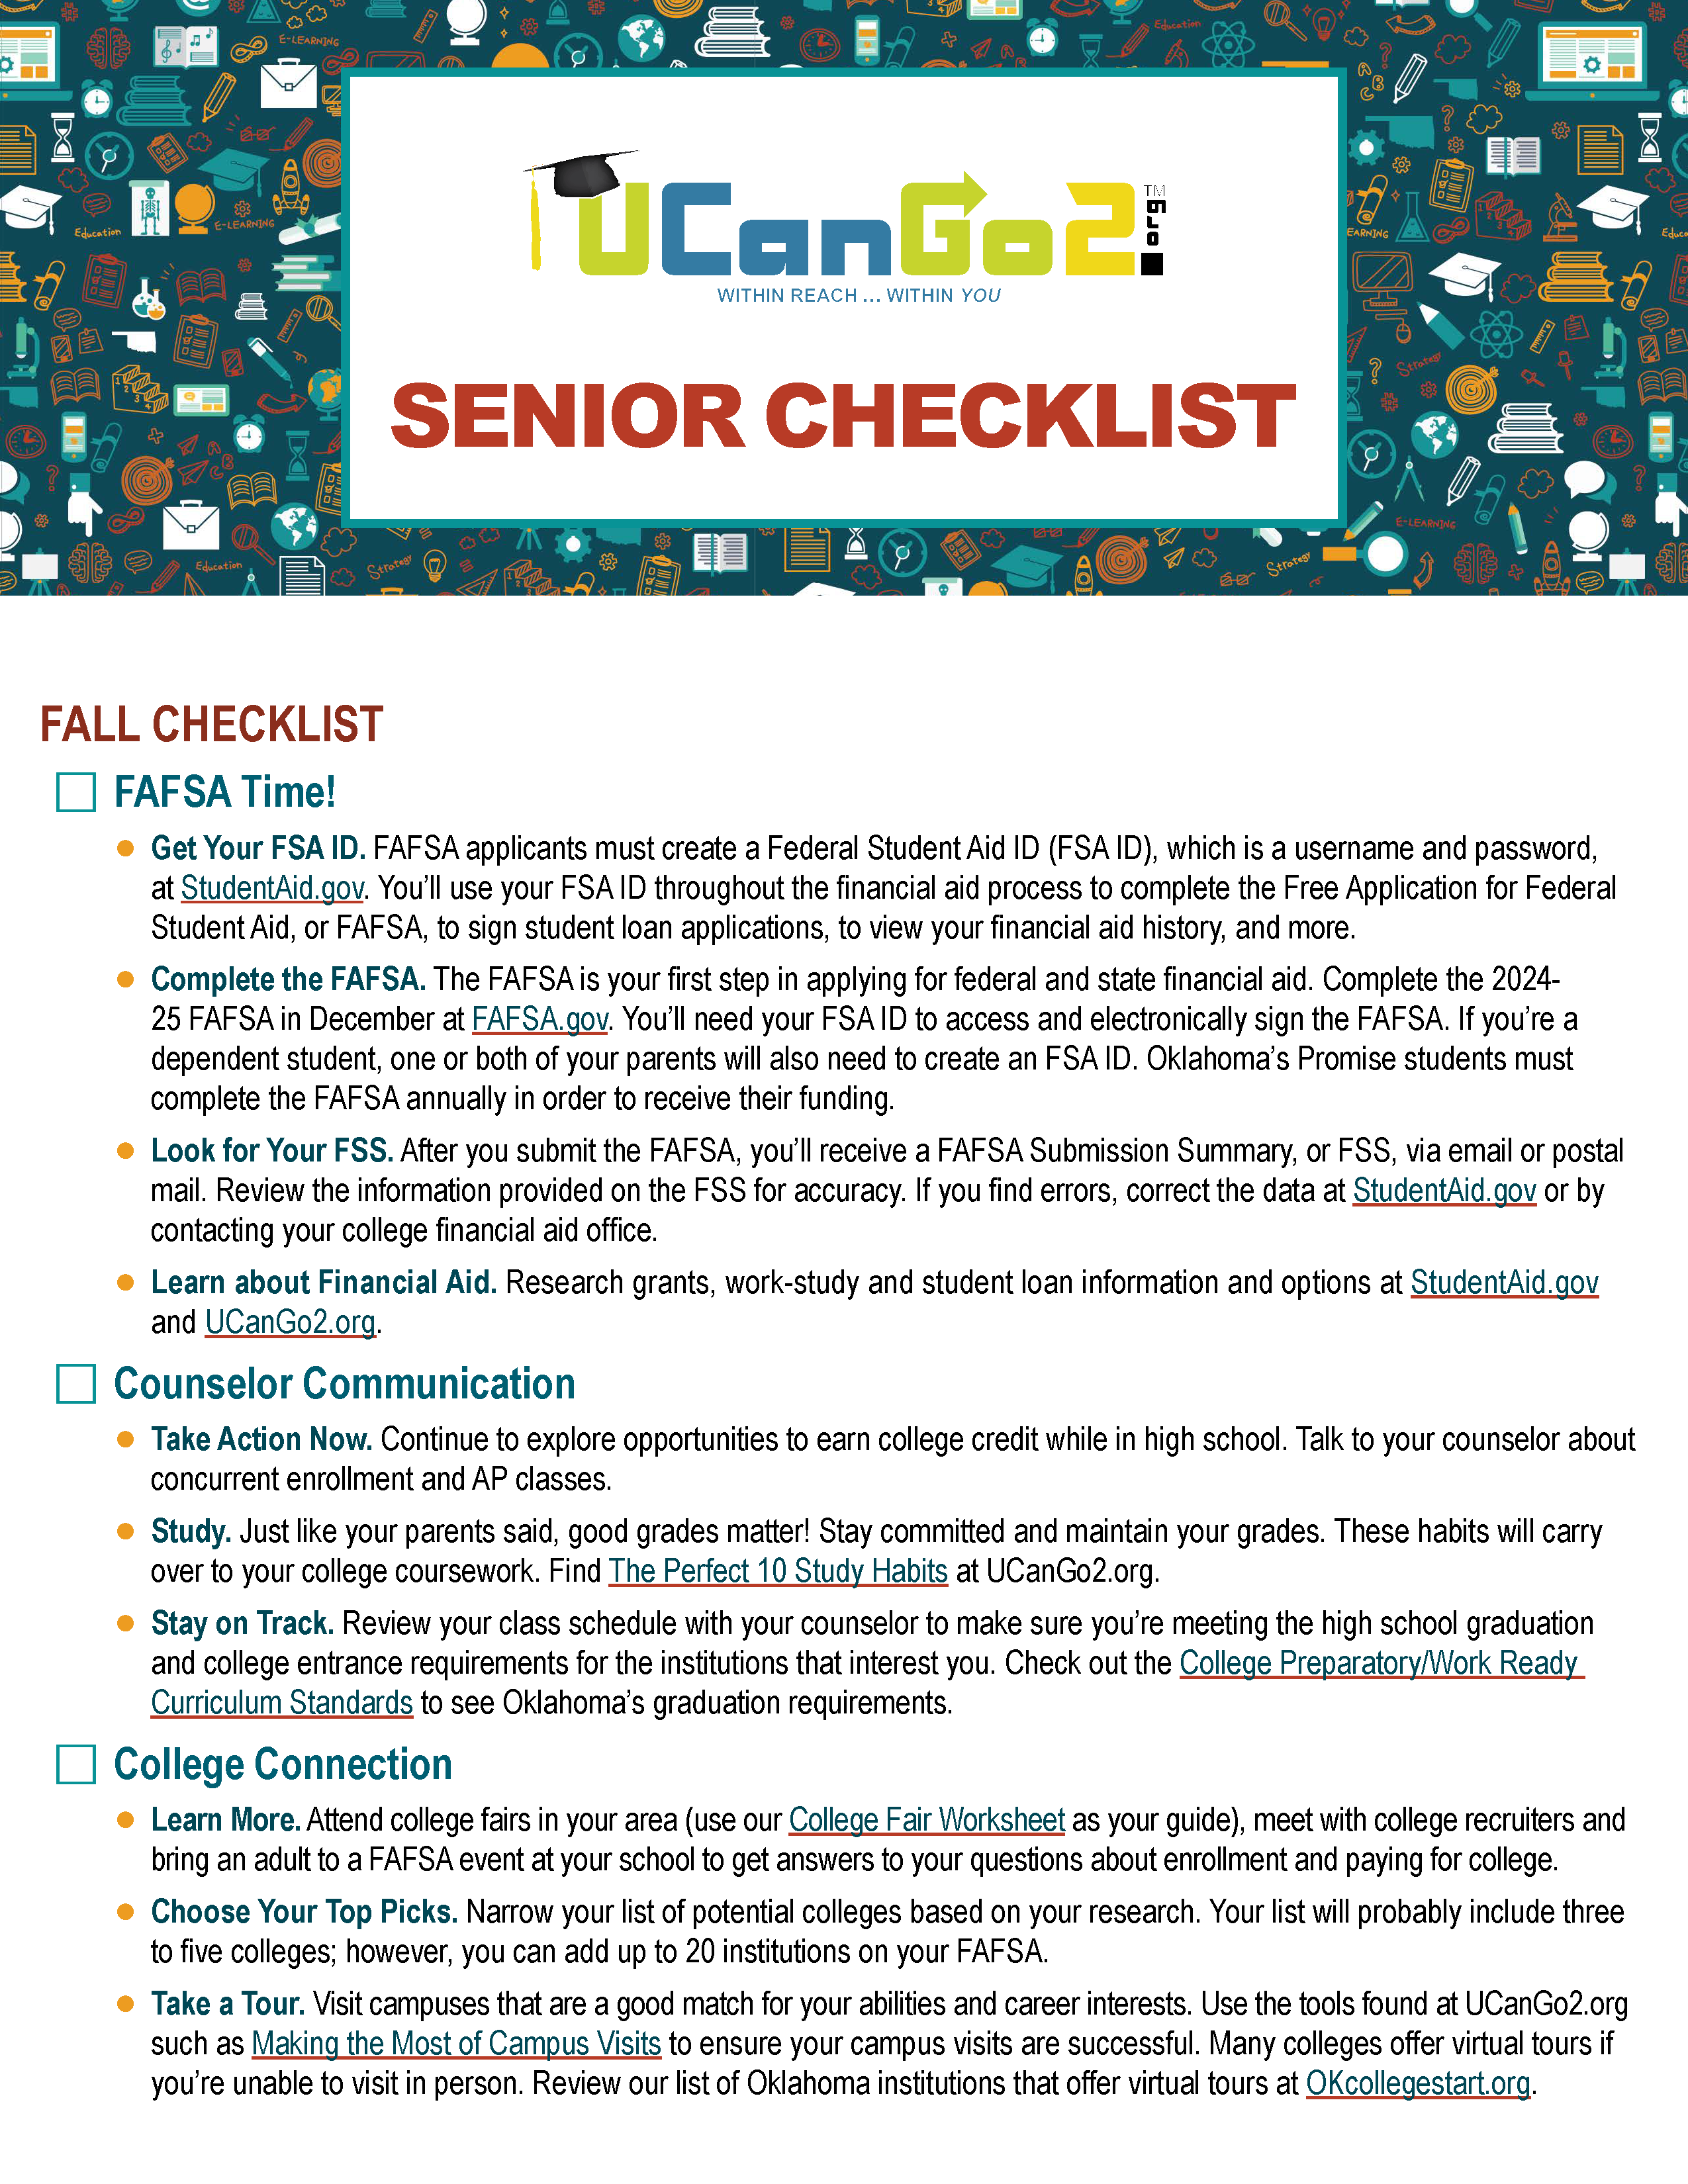 PDF of Senior Checklist